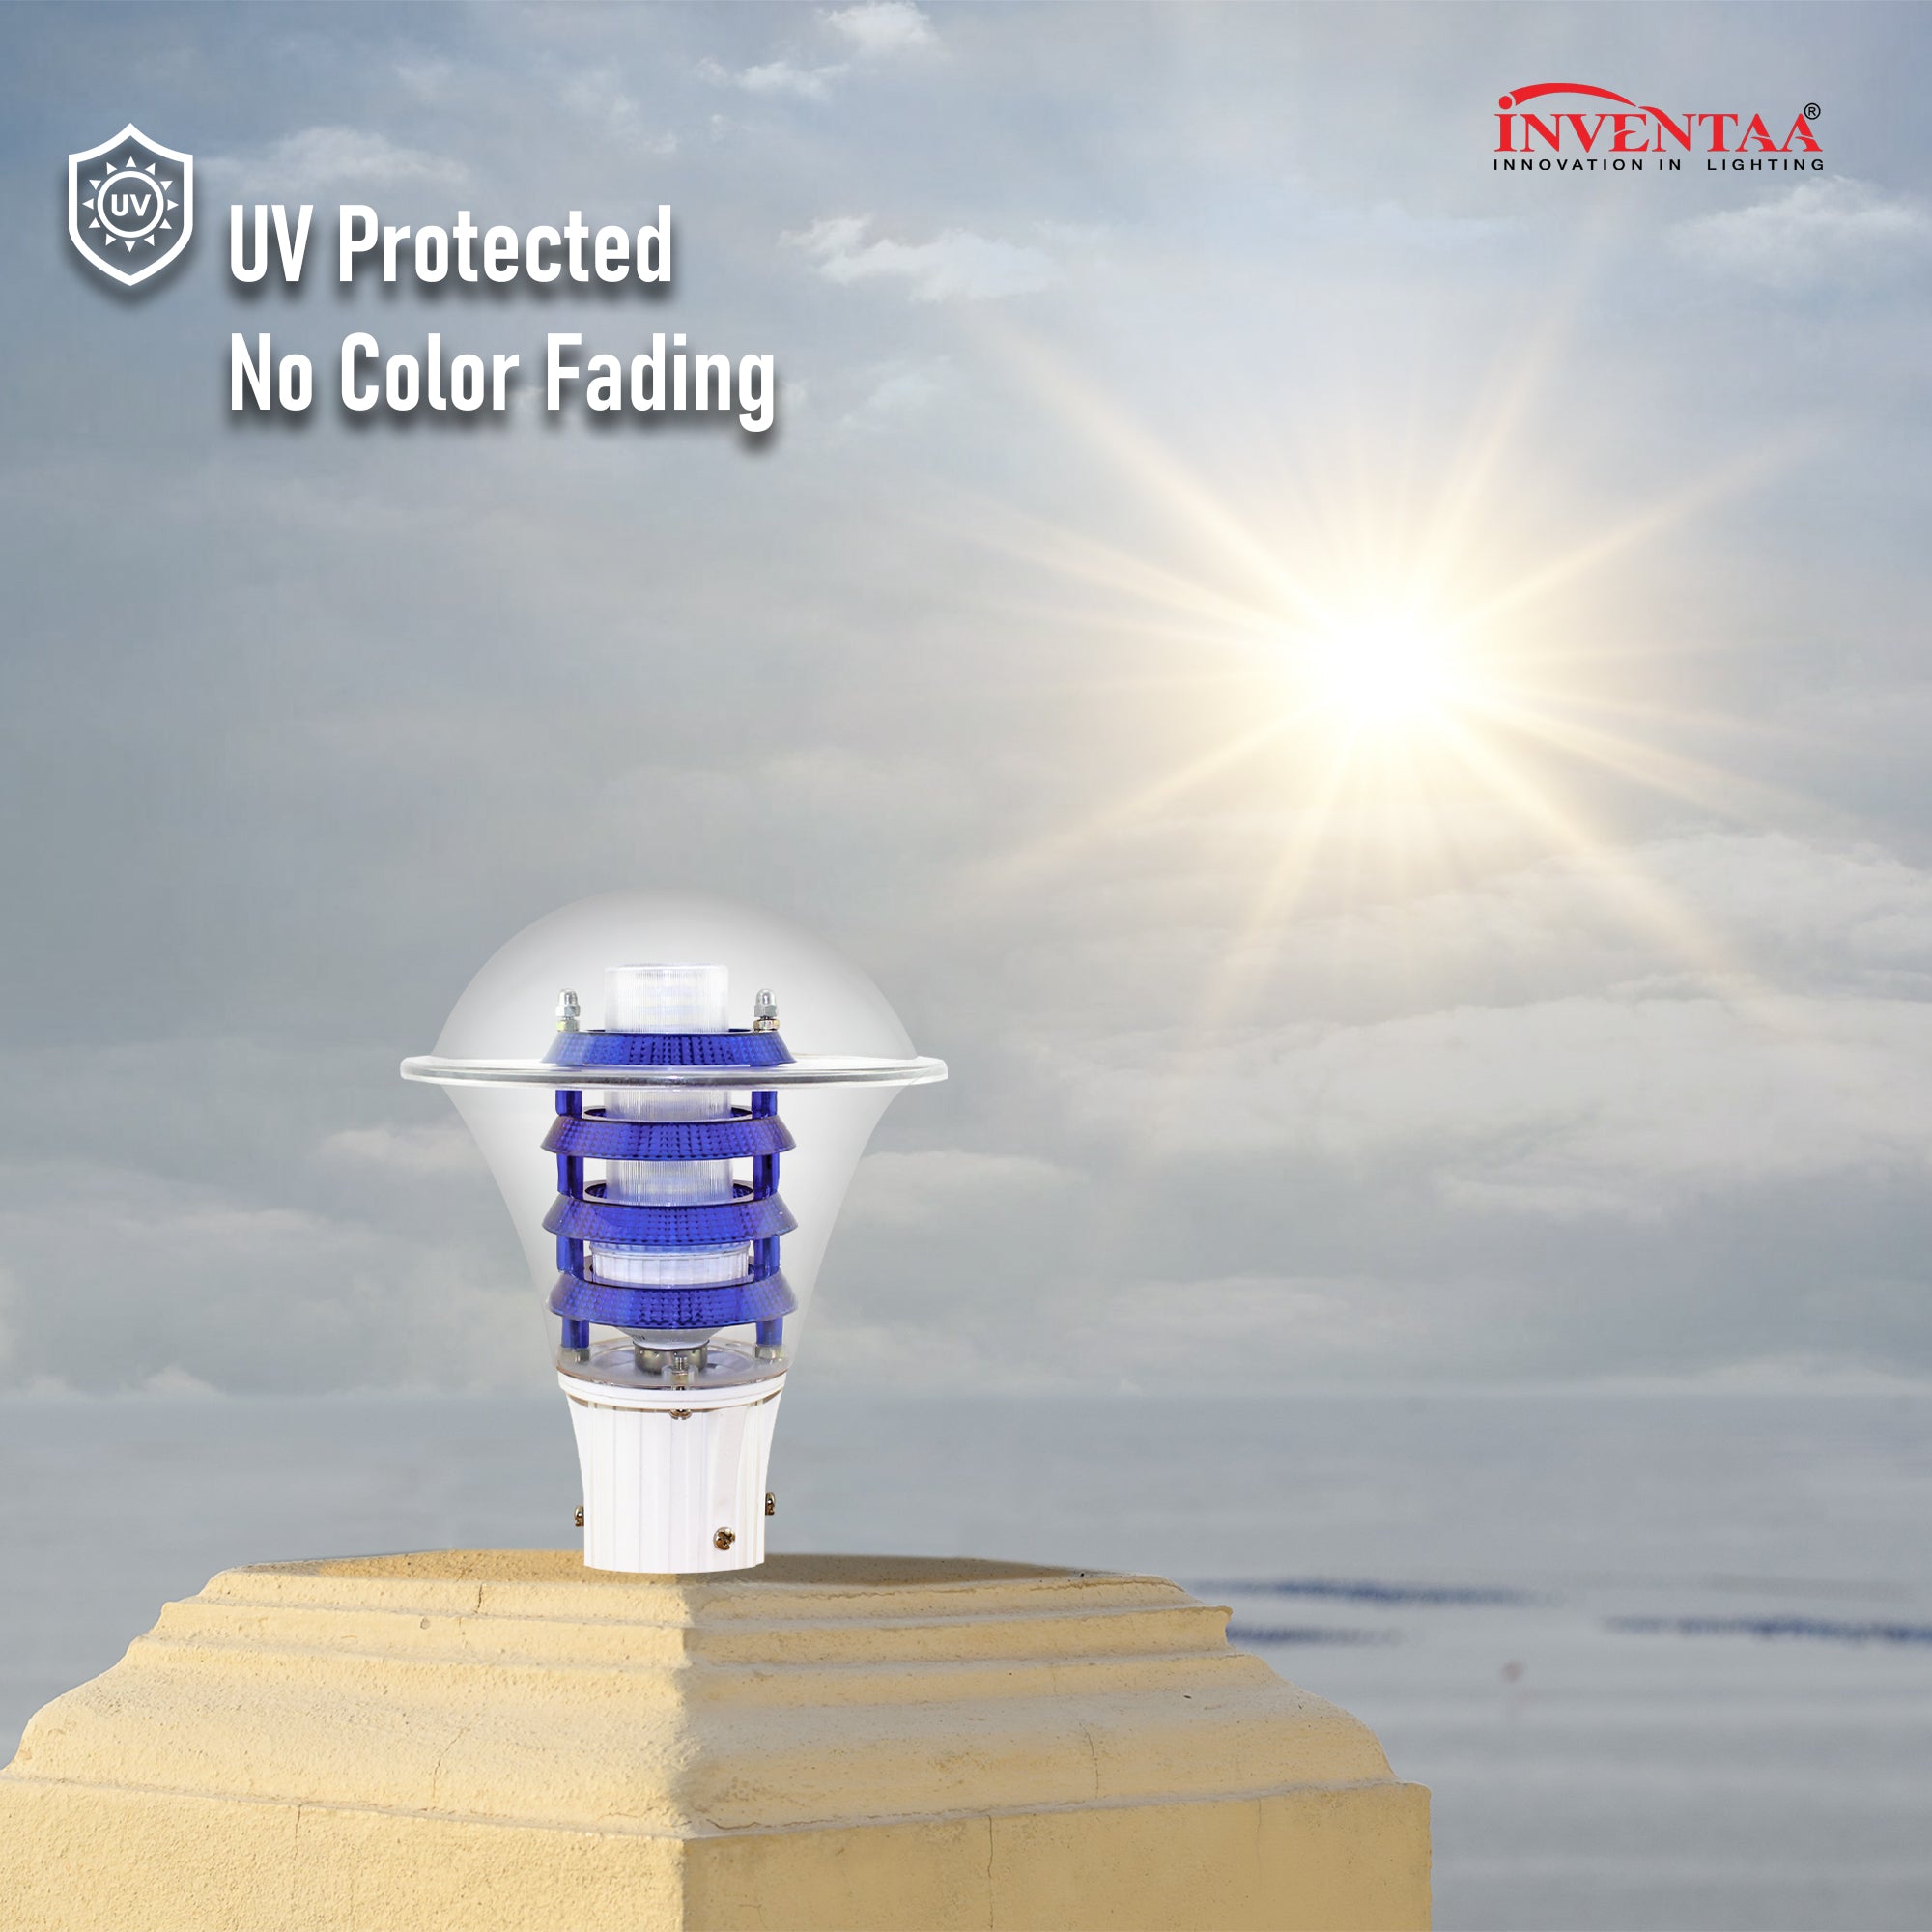 UV Protected Viva PC LED Gate Light | Best LED Gate Light Model Online at affordable price Online #bulb options_cool